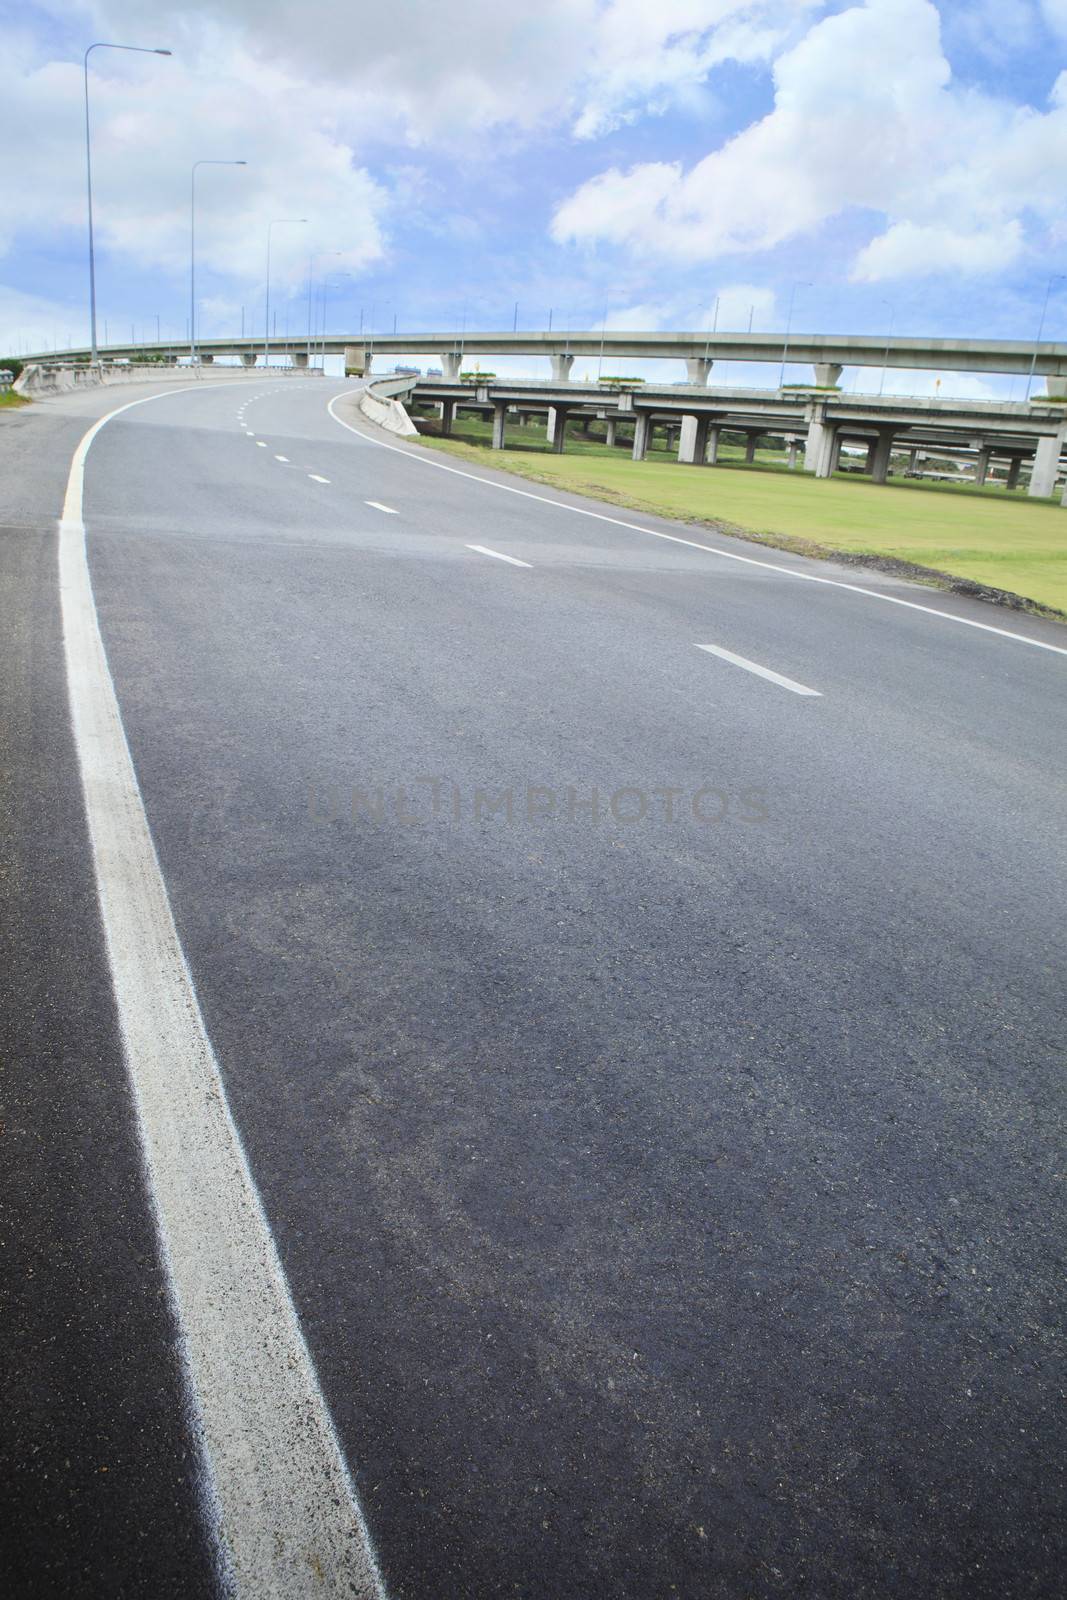 asphalt road land bridge infra structure government public service by khunaspix